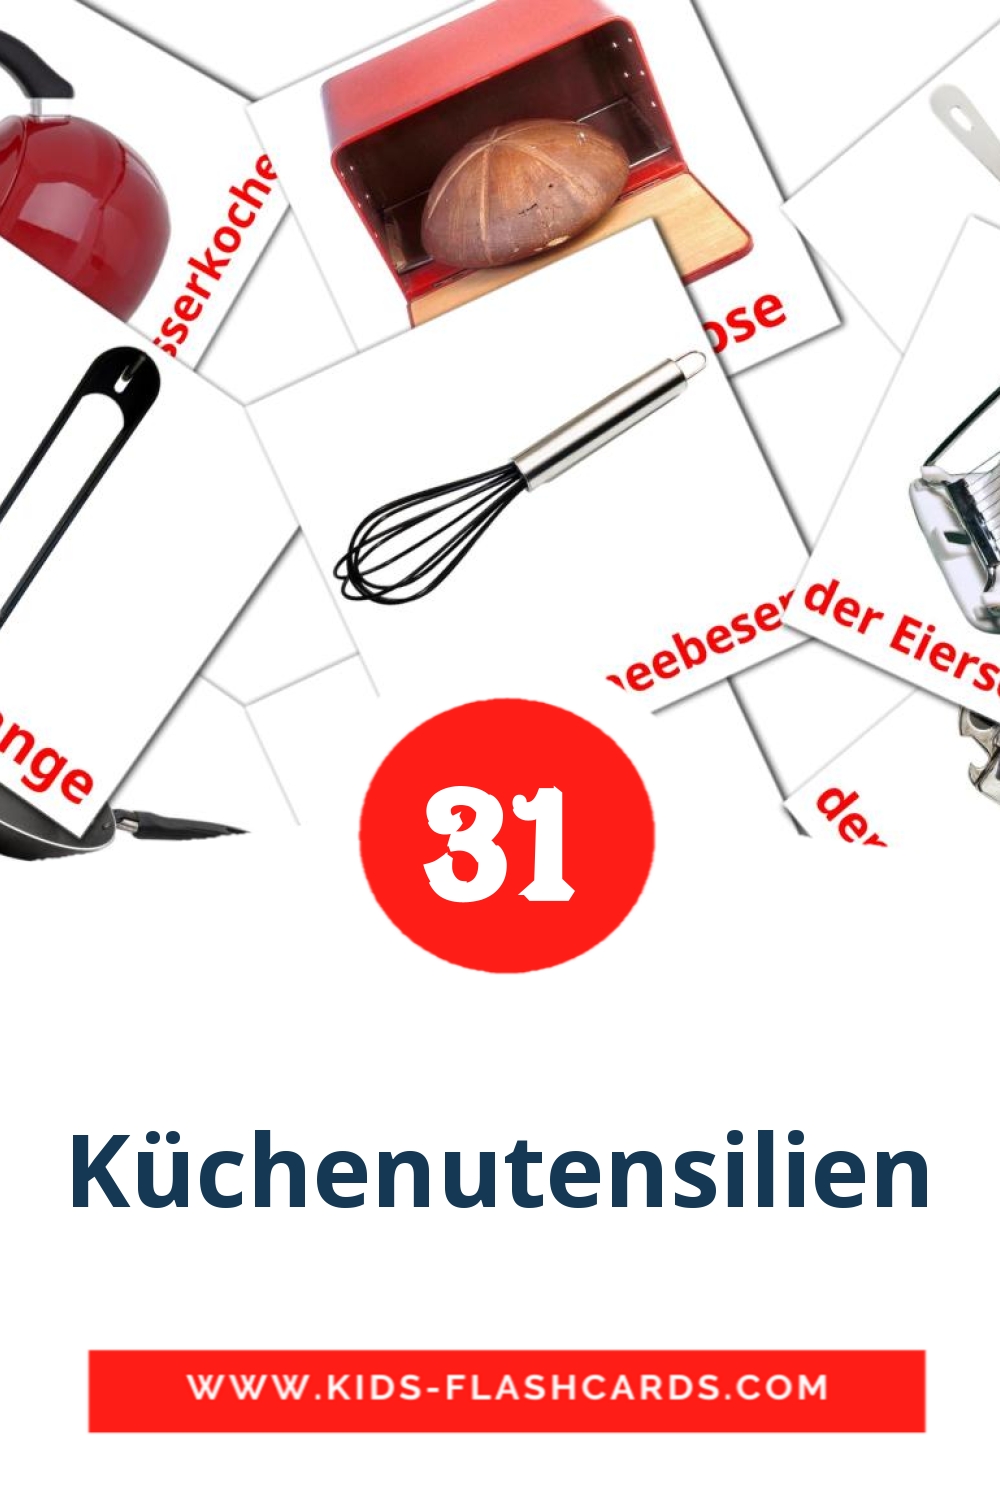 Küchenutensilien на немецком для Детского Сада (35 карточек)